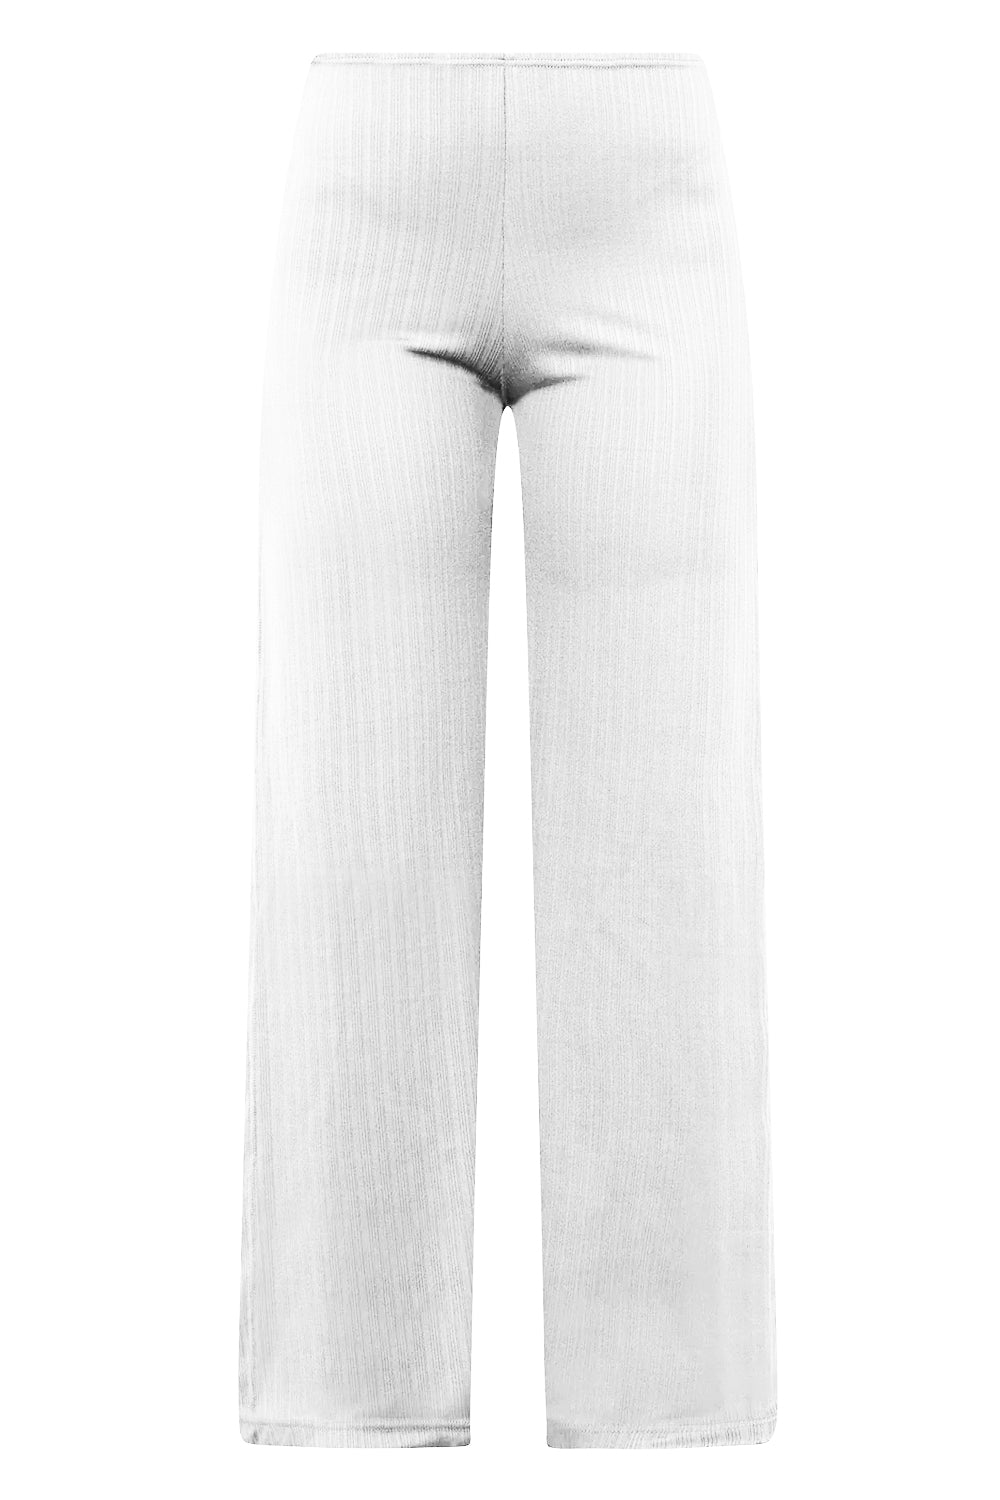 COTAZUR Pantalone in microfibra